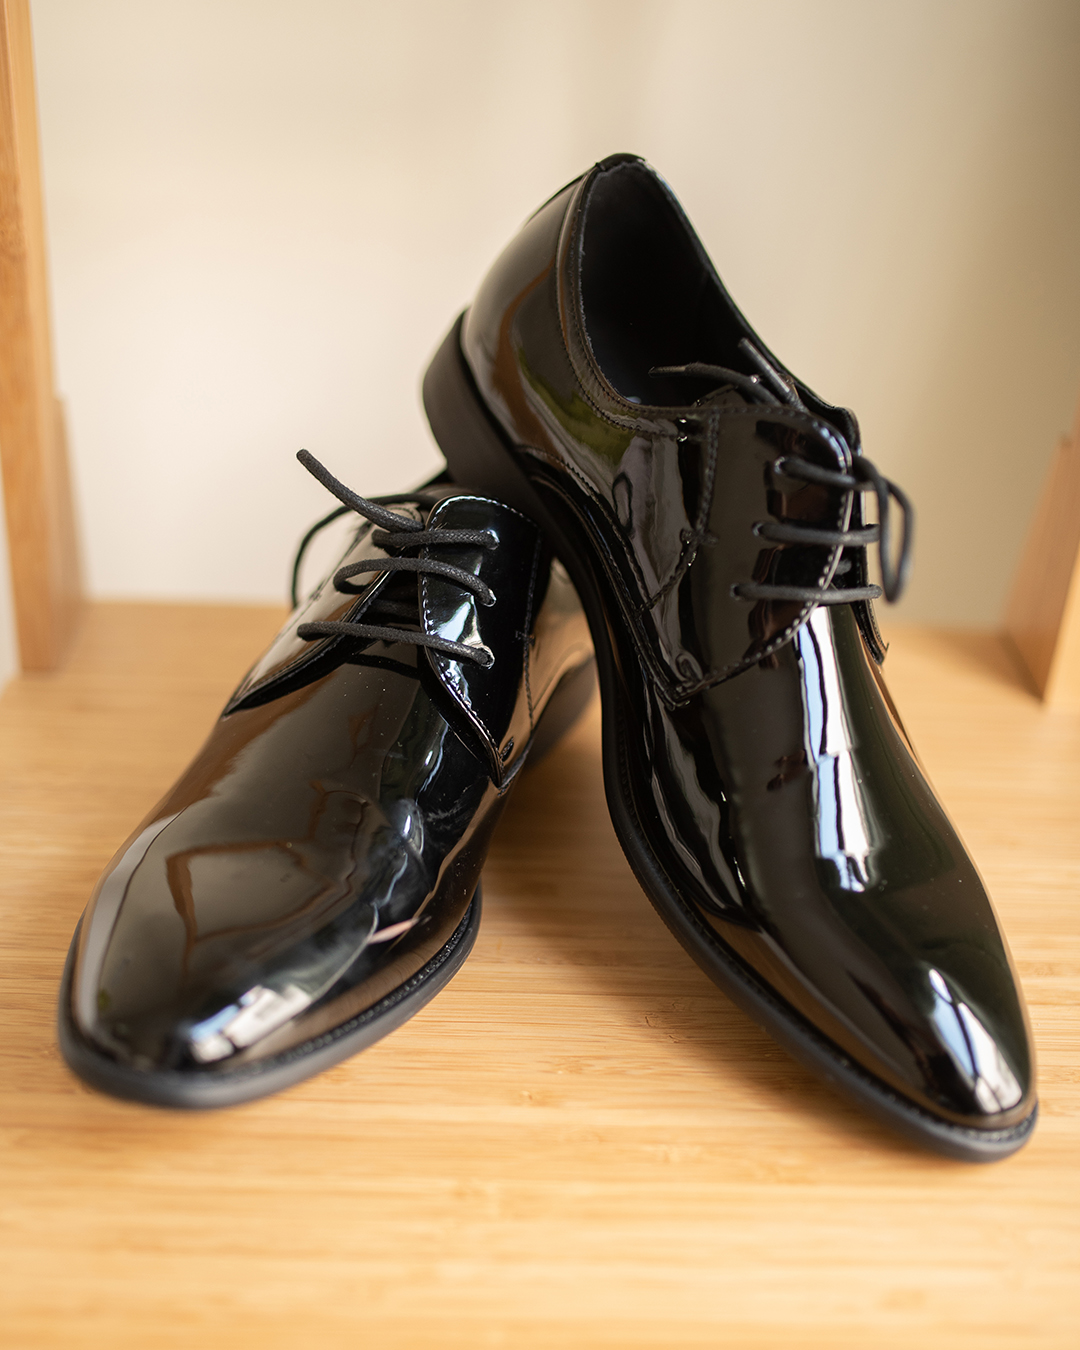 mens wedding shoes black oxford for tuxedo shutterstoc